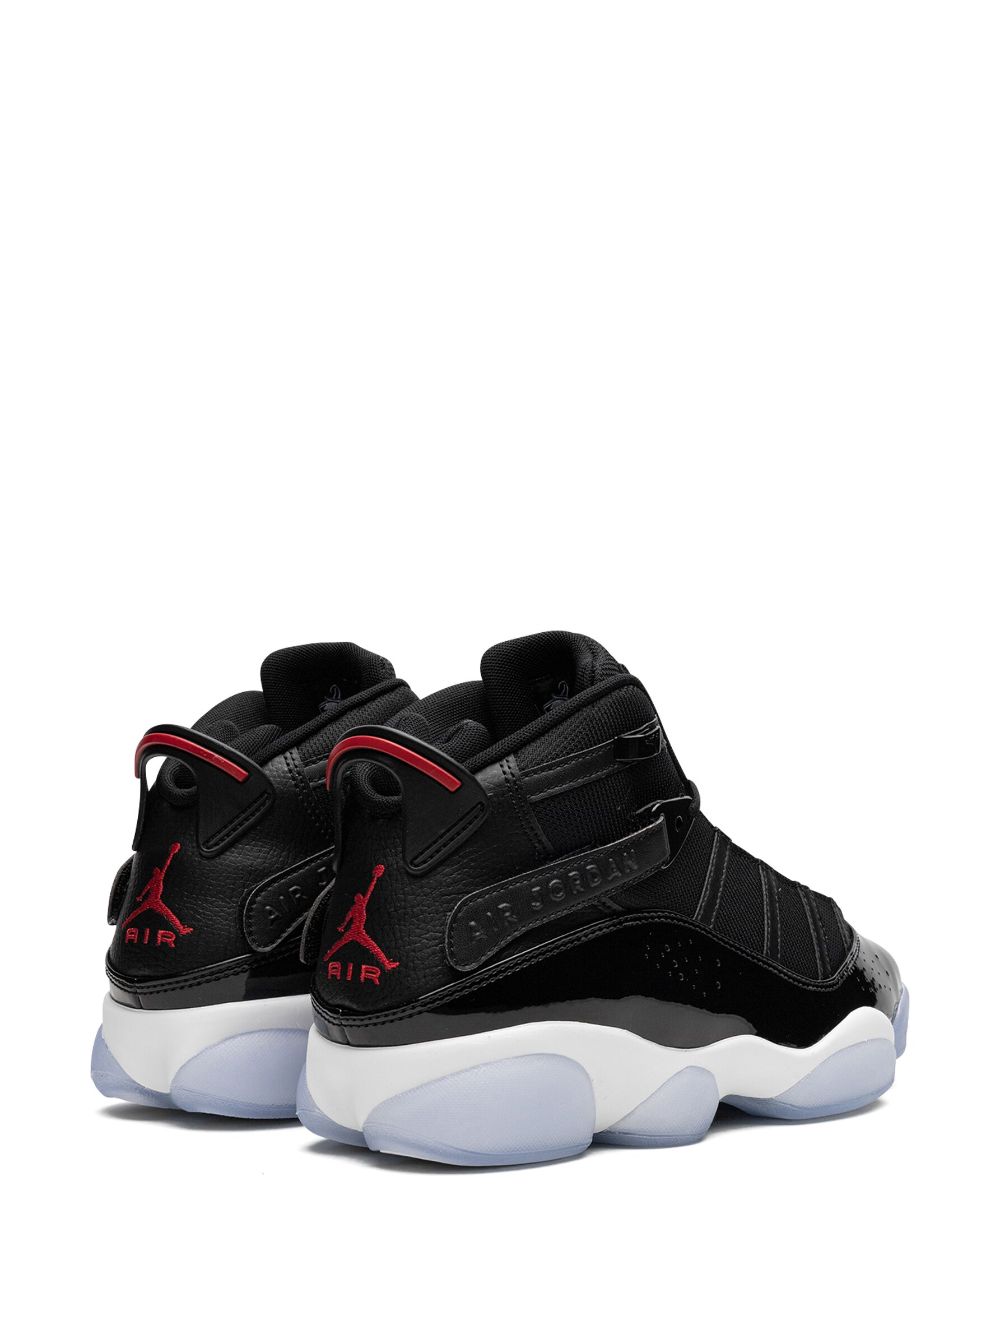 Shop Jordan 6 Rings "black/gym Red/white" Sneakers